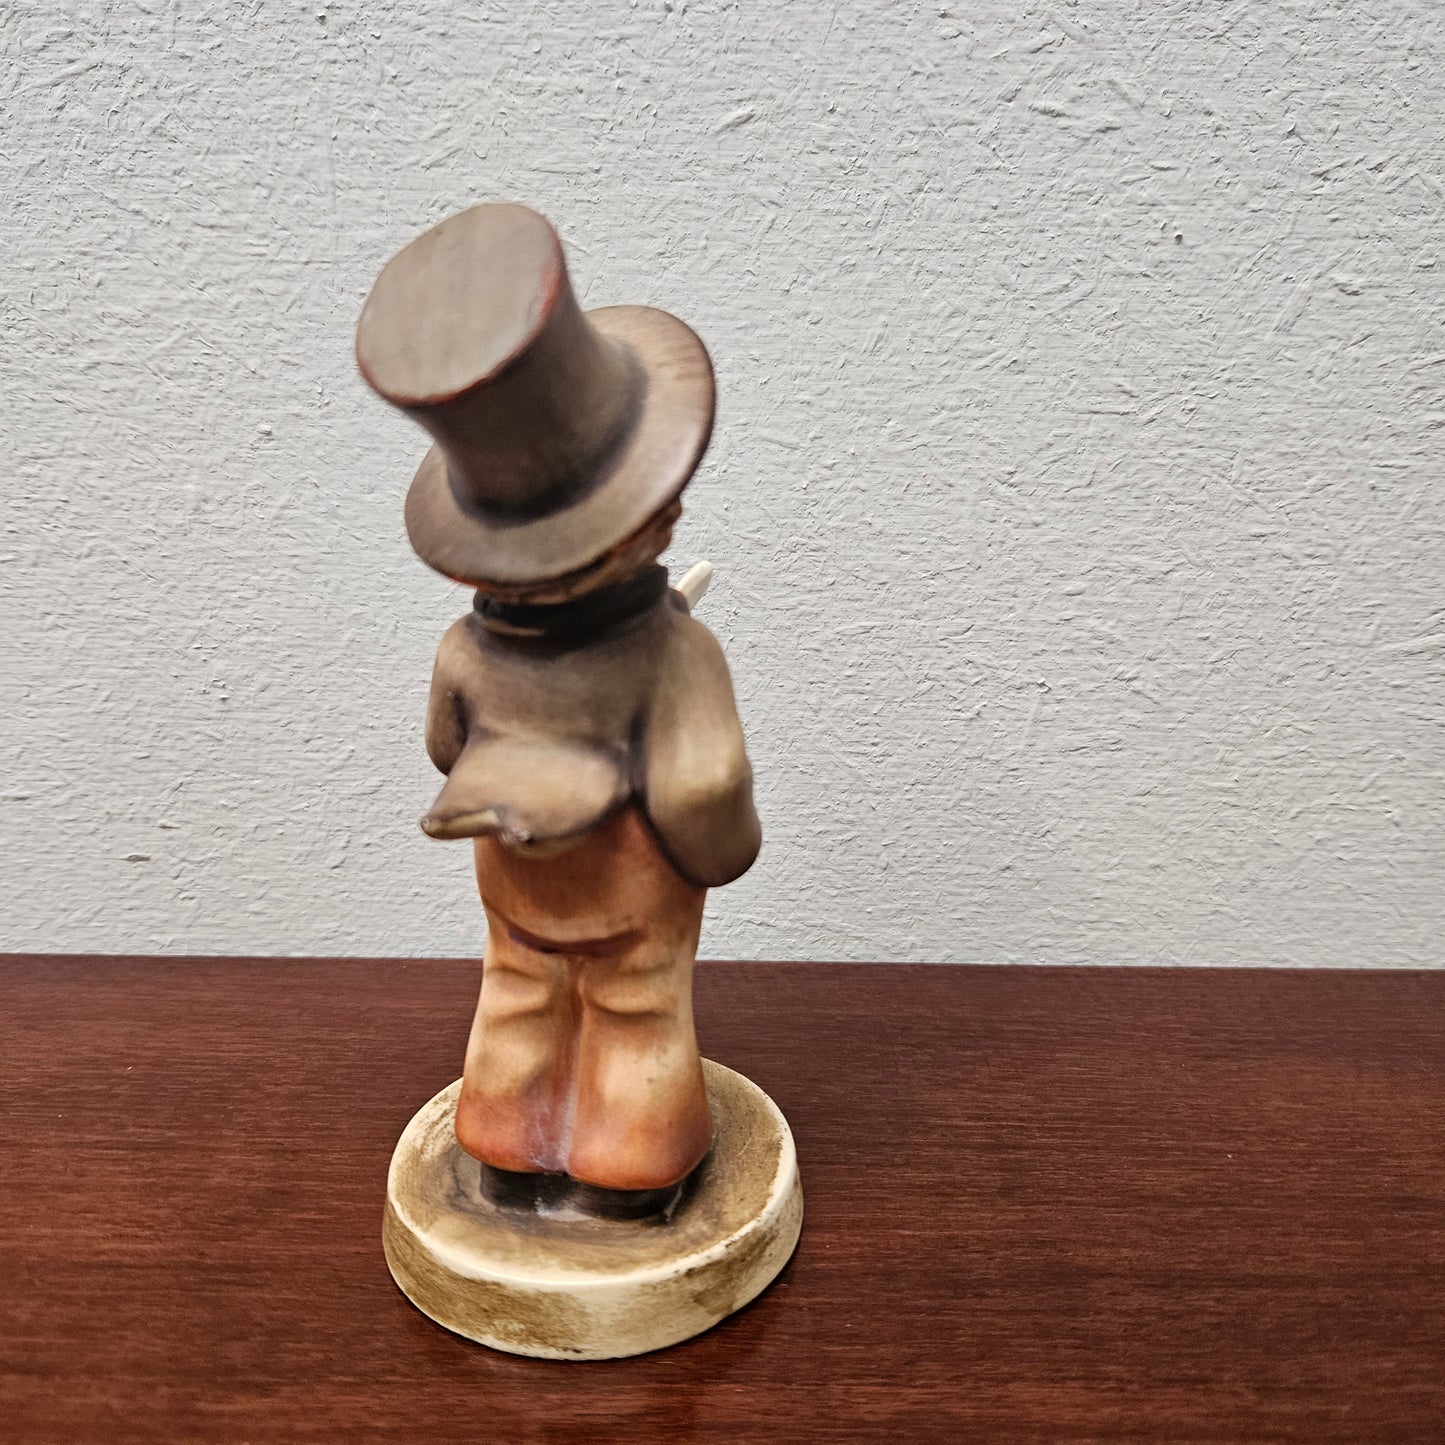 Hummel figurine of Boy Singing